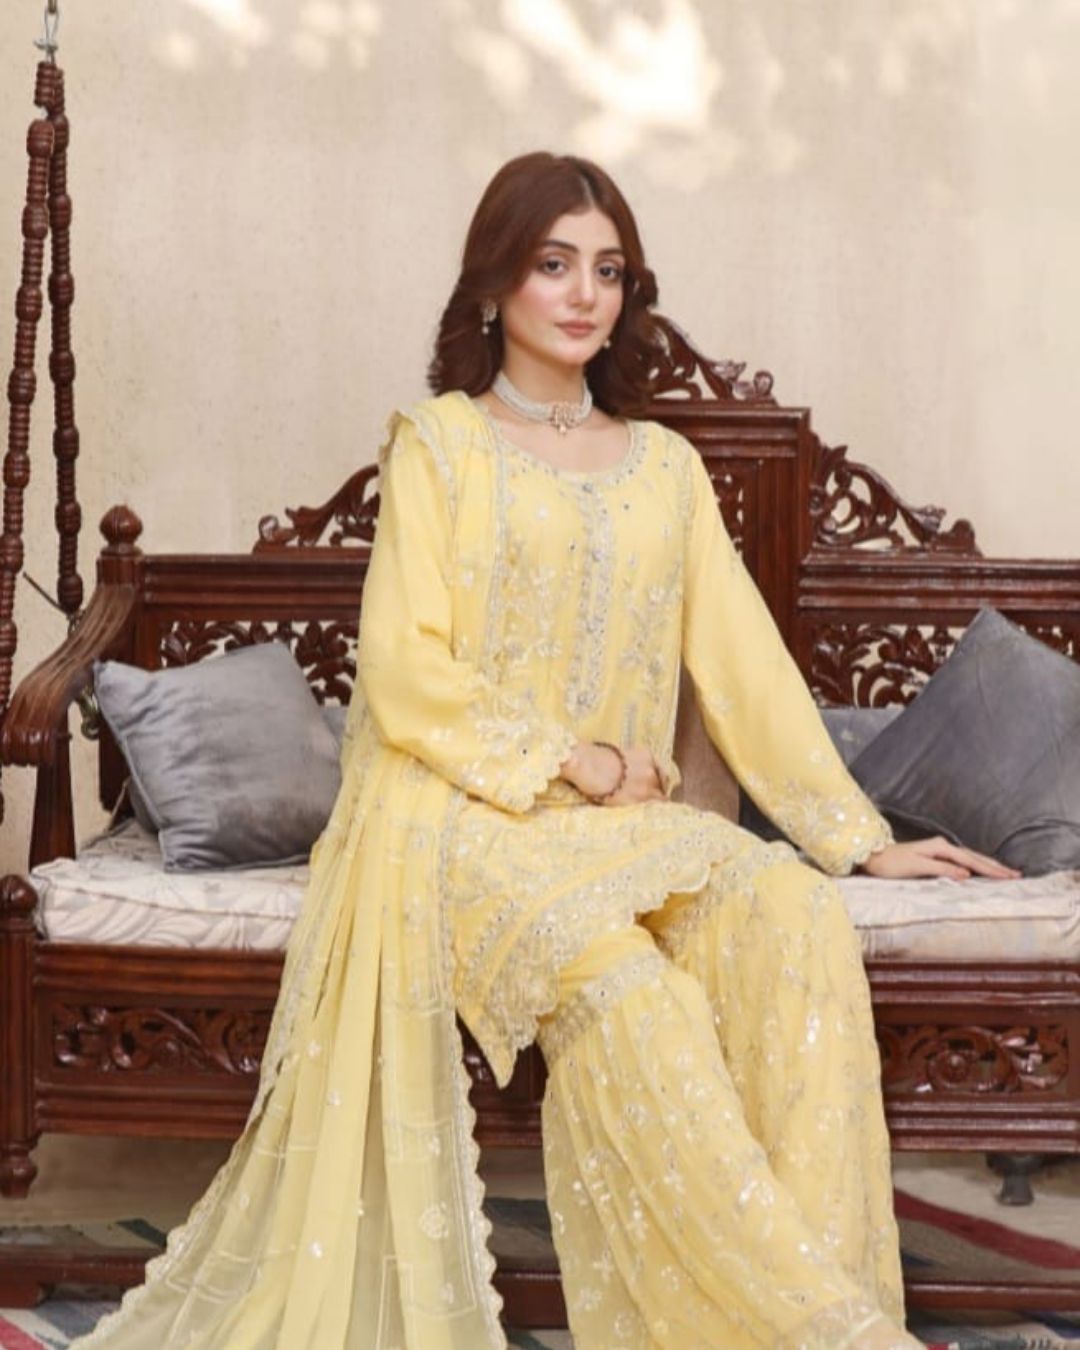 How to Choose the Perfect Pakistani Semi-Formal Dress